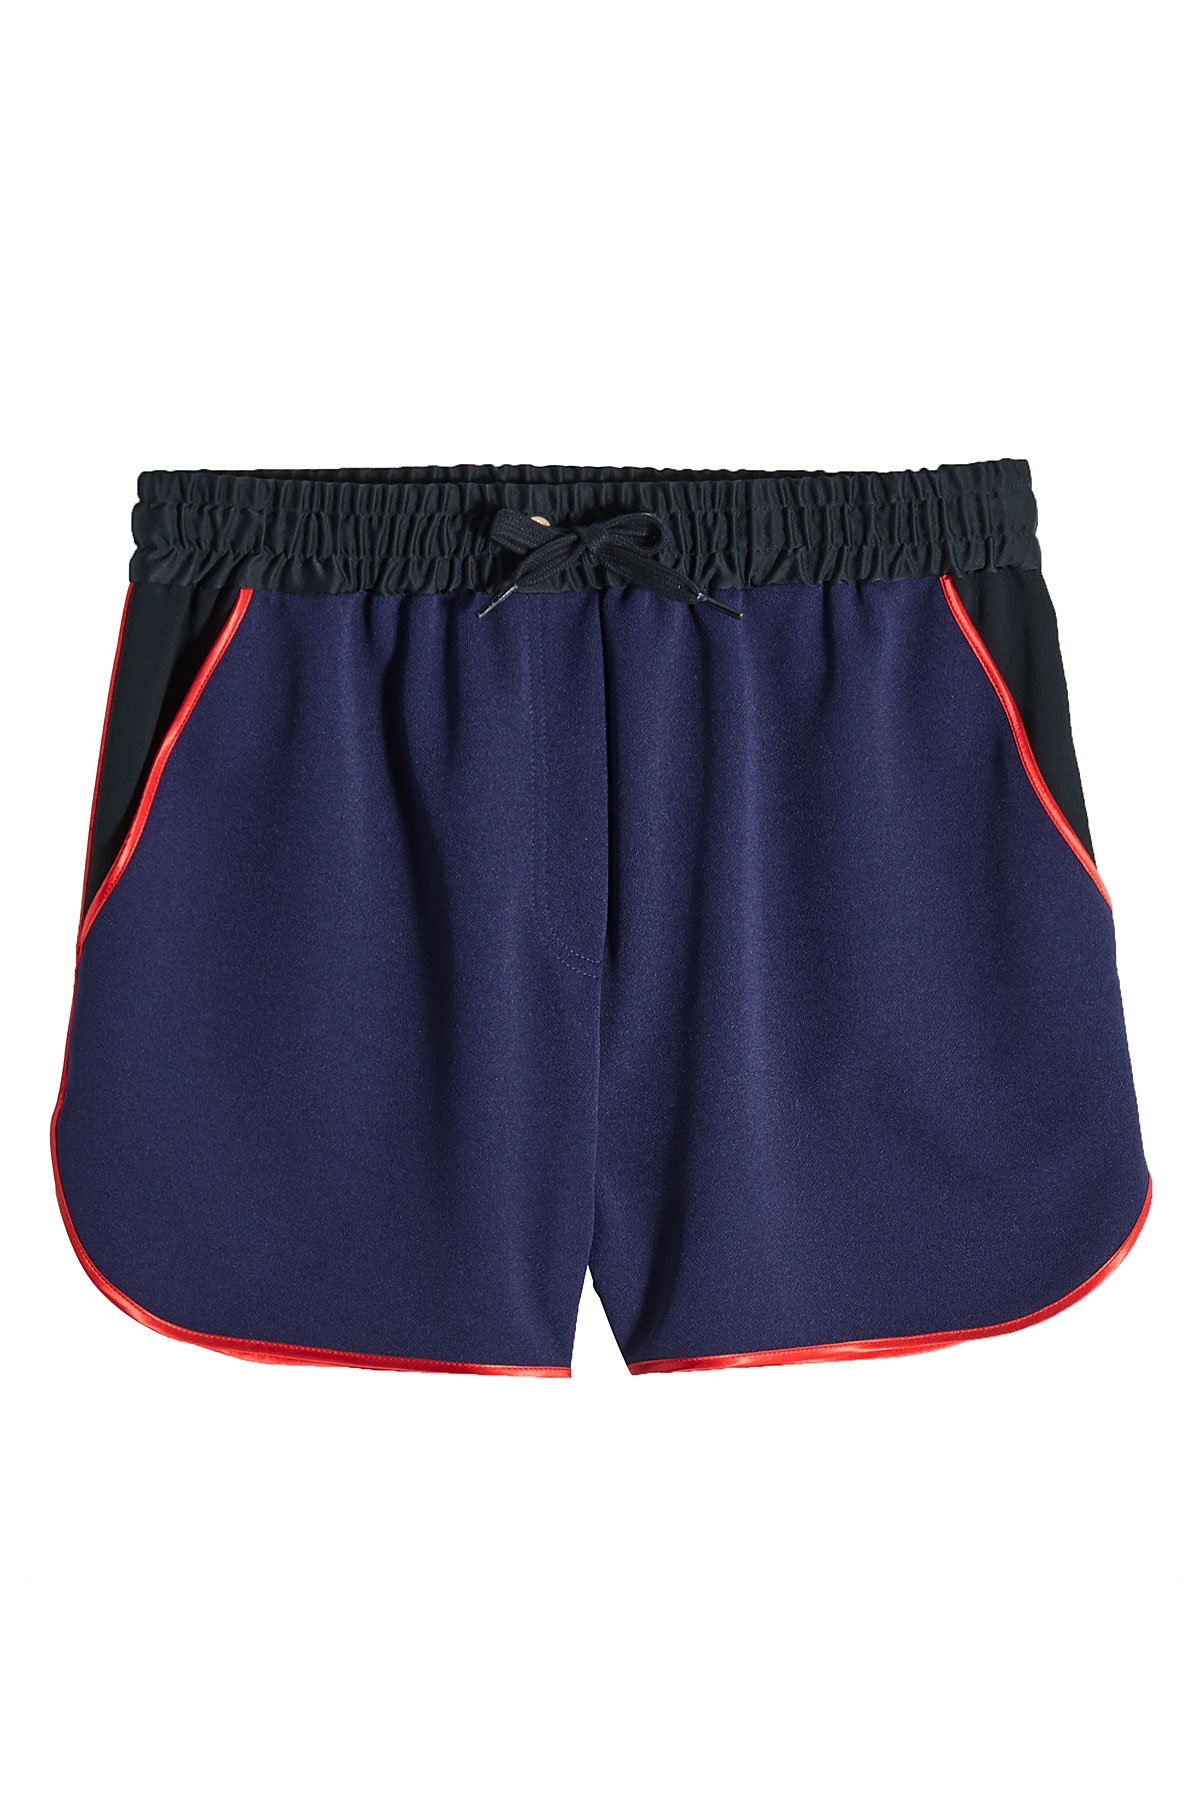 Hilfiger Collection - Sport Hybrid Shorts